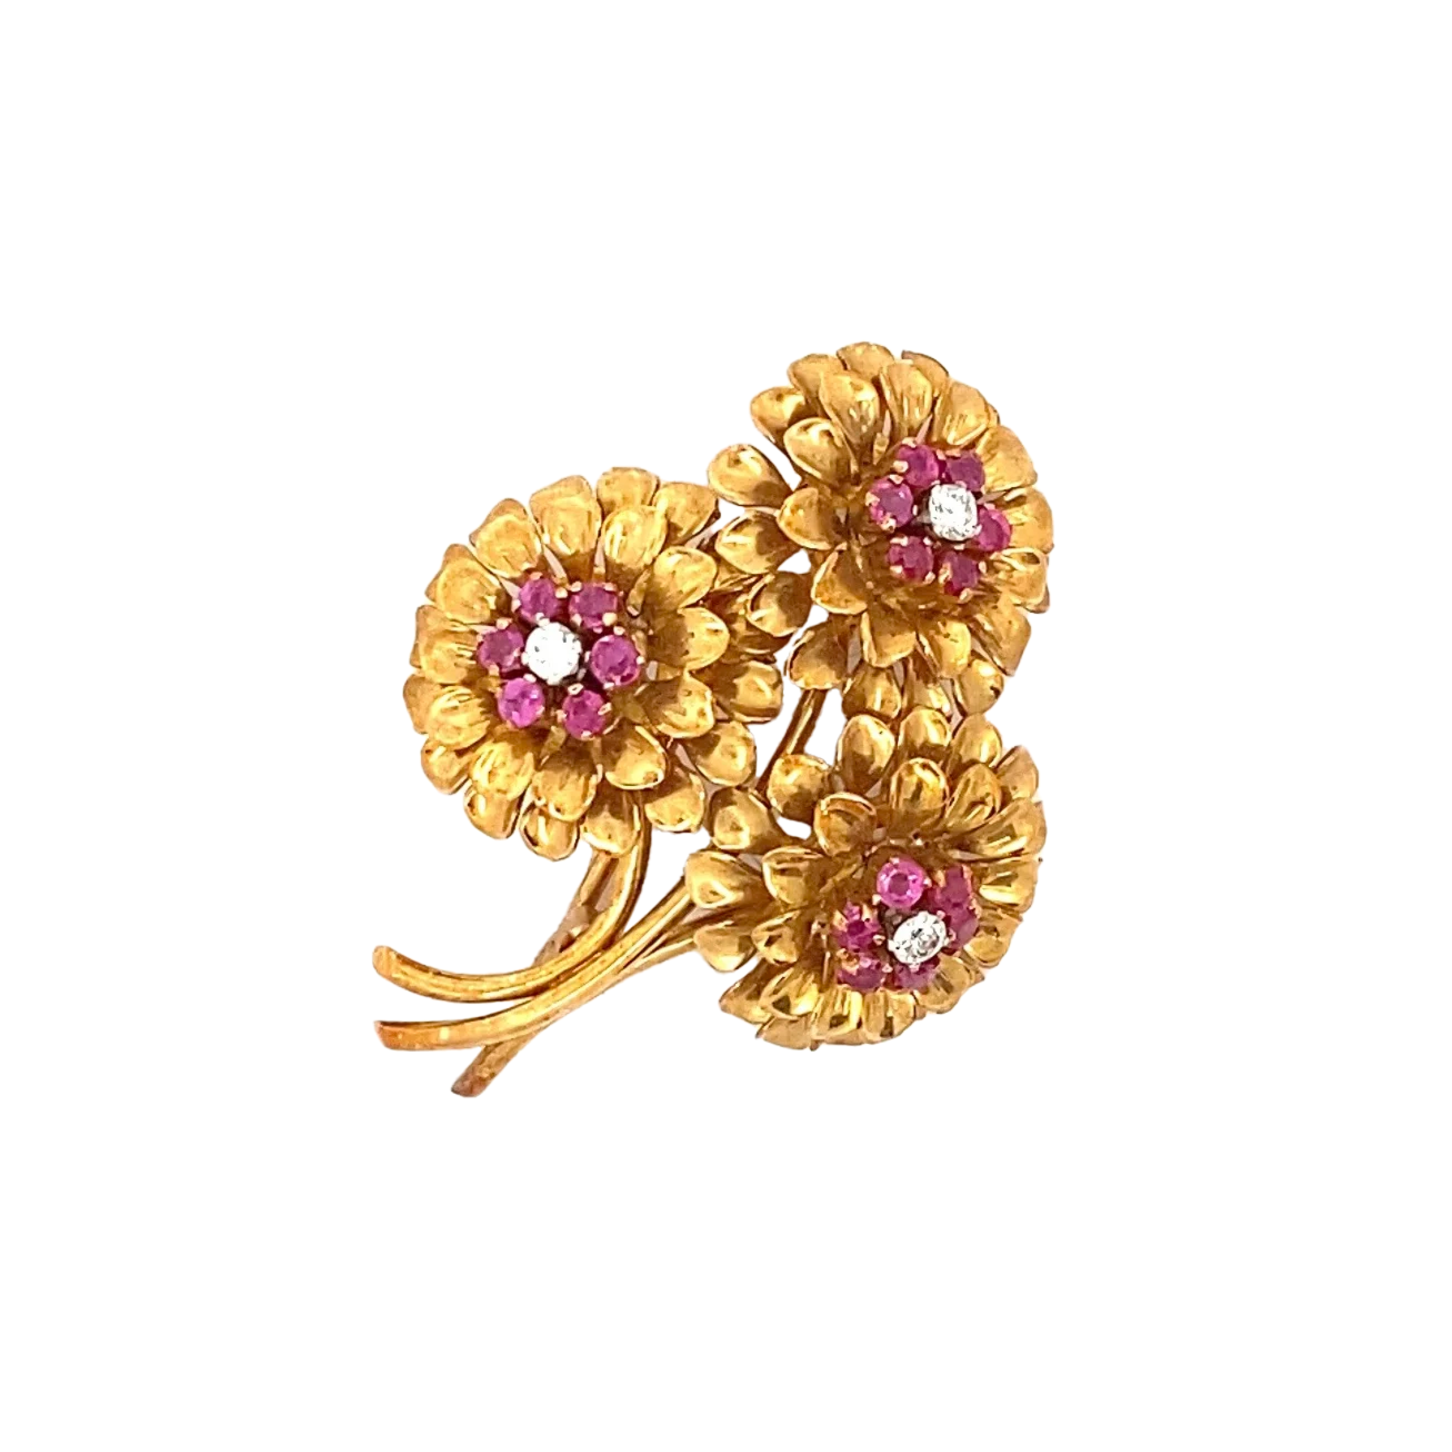 CLEARANCE 40% OFF - Vintage 1960’s 14 Karat Yellow Gold Ruby & Diamond  Flower Brooch